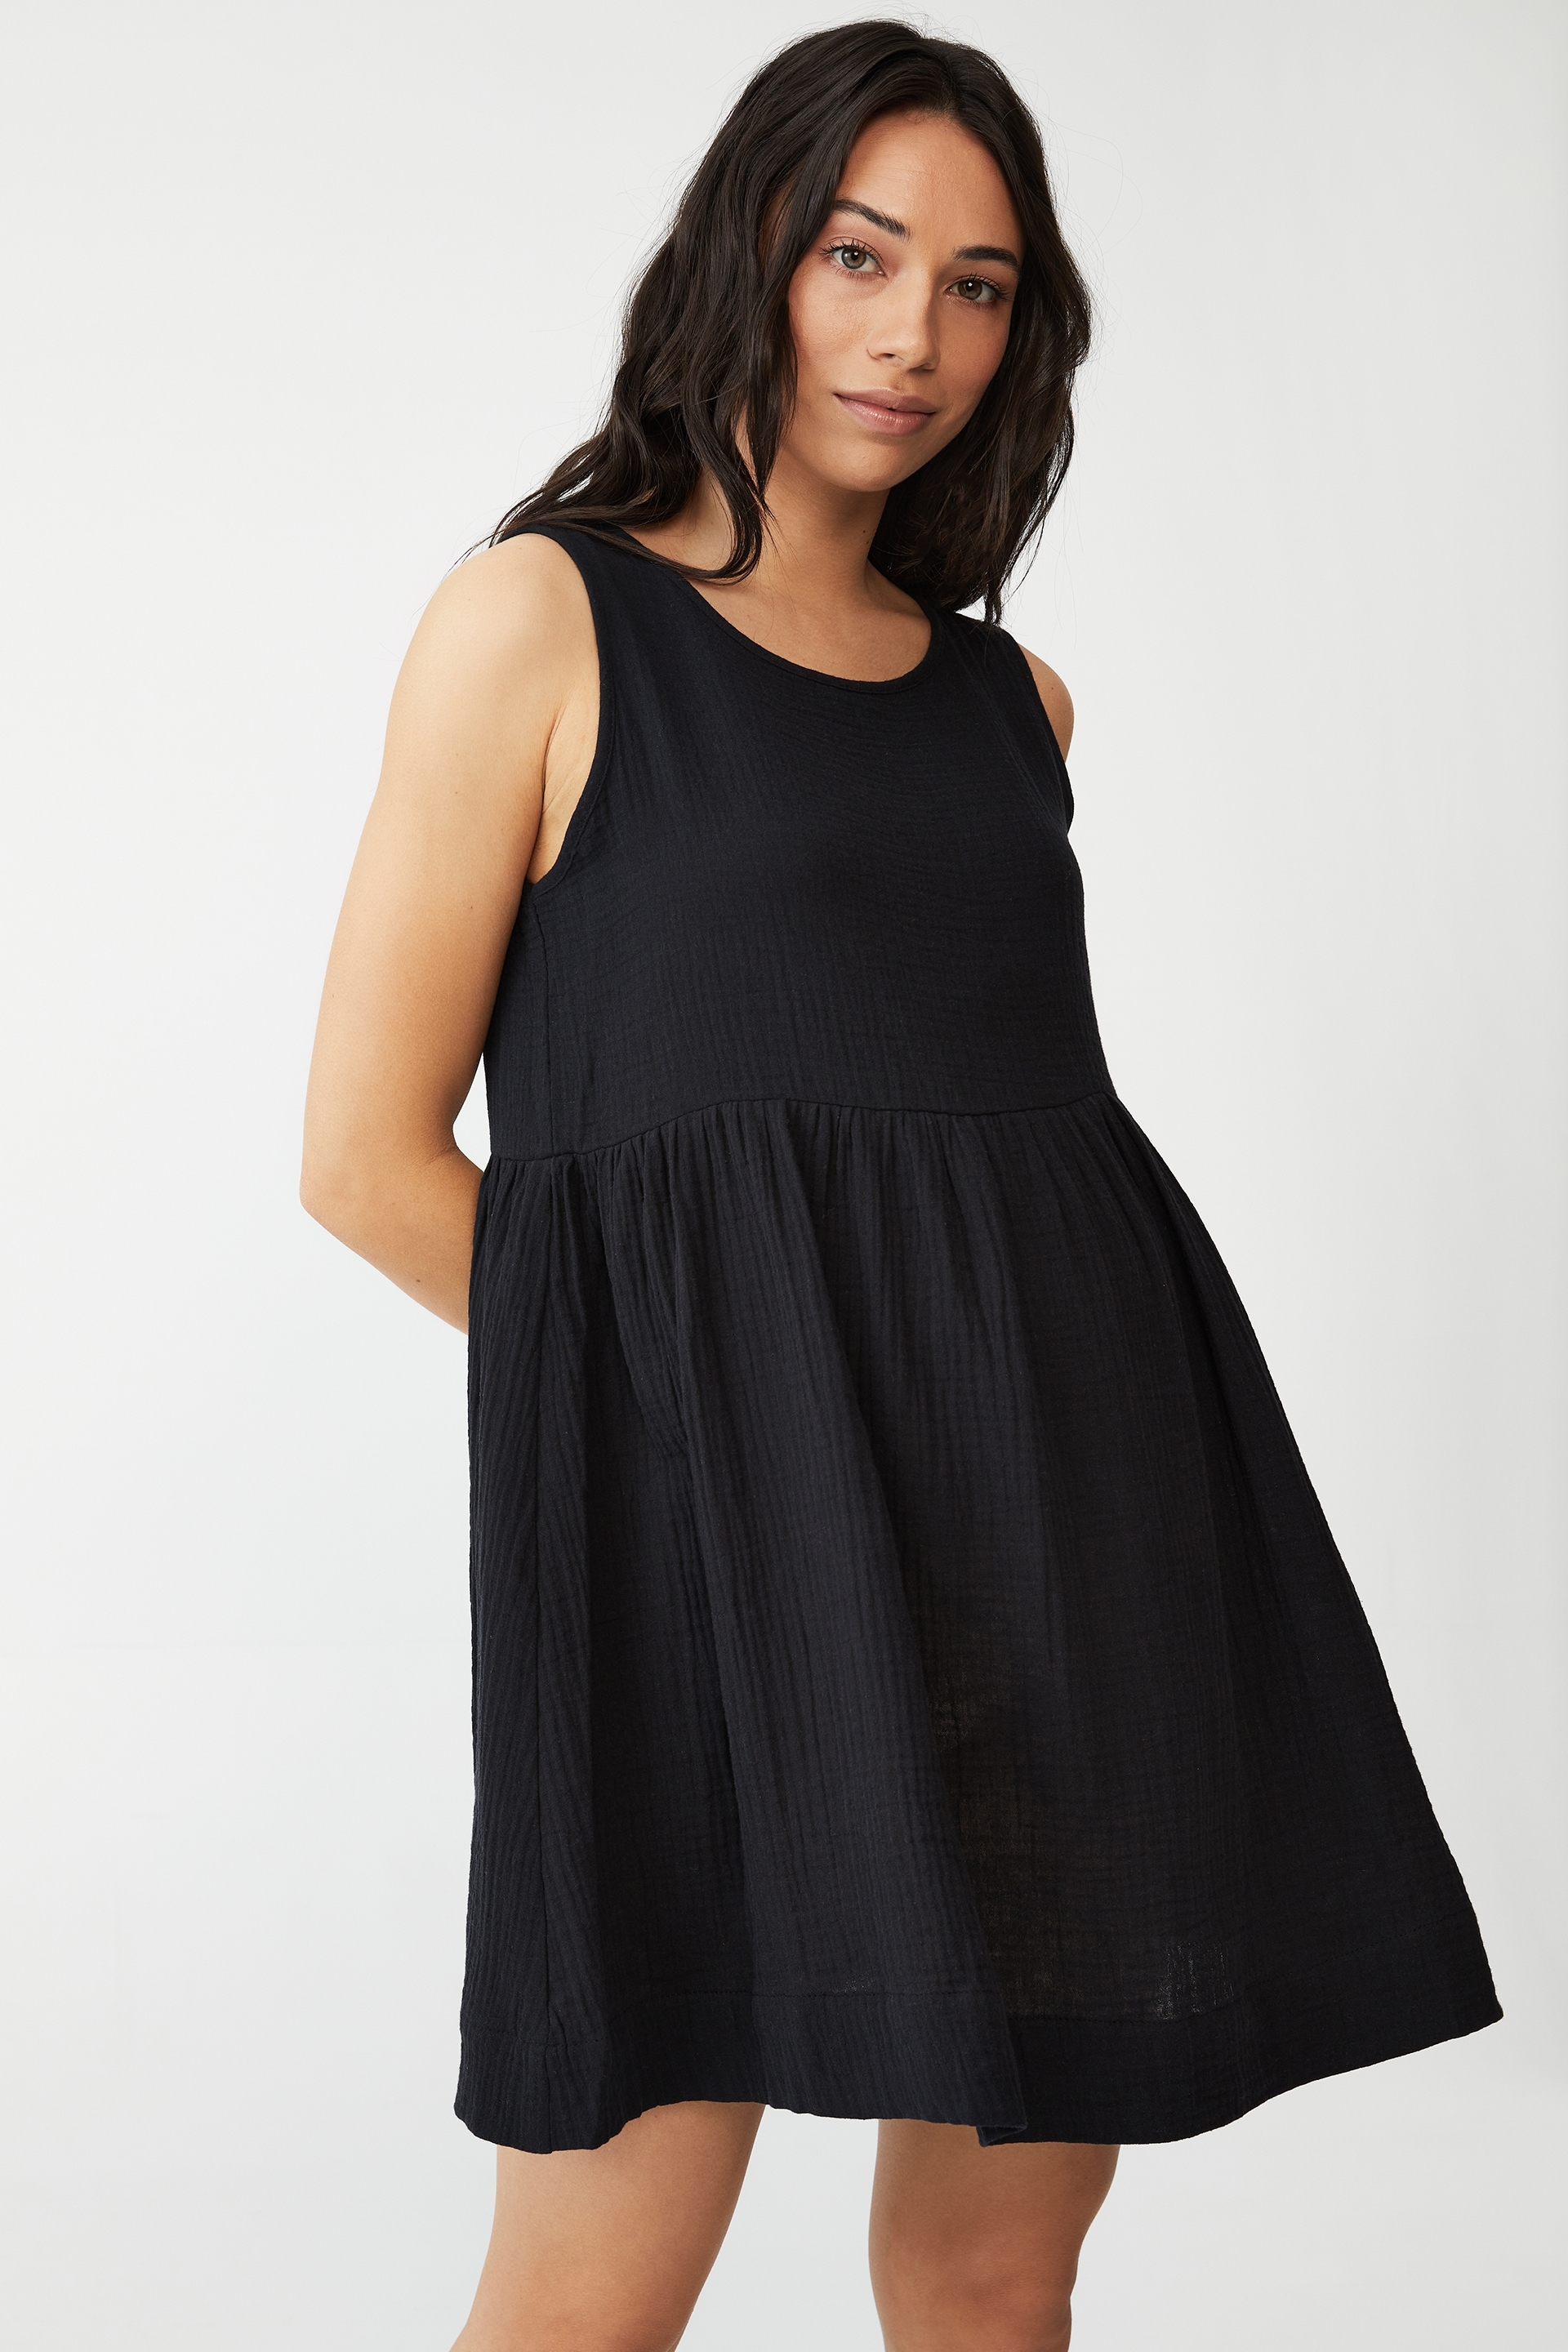 Cotton On Women - Maternity Cheese Cloth Sleeveless Dress - Black